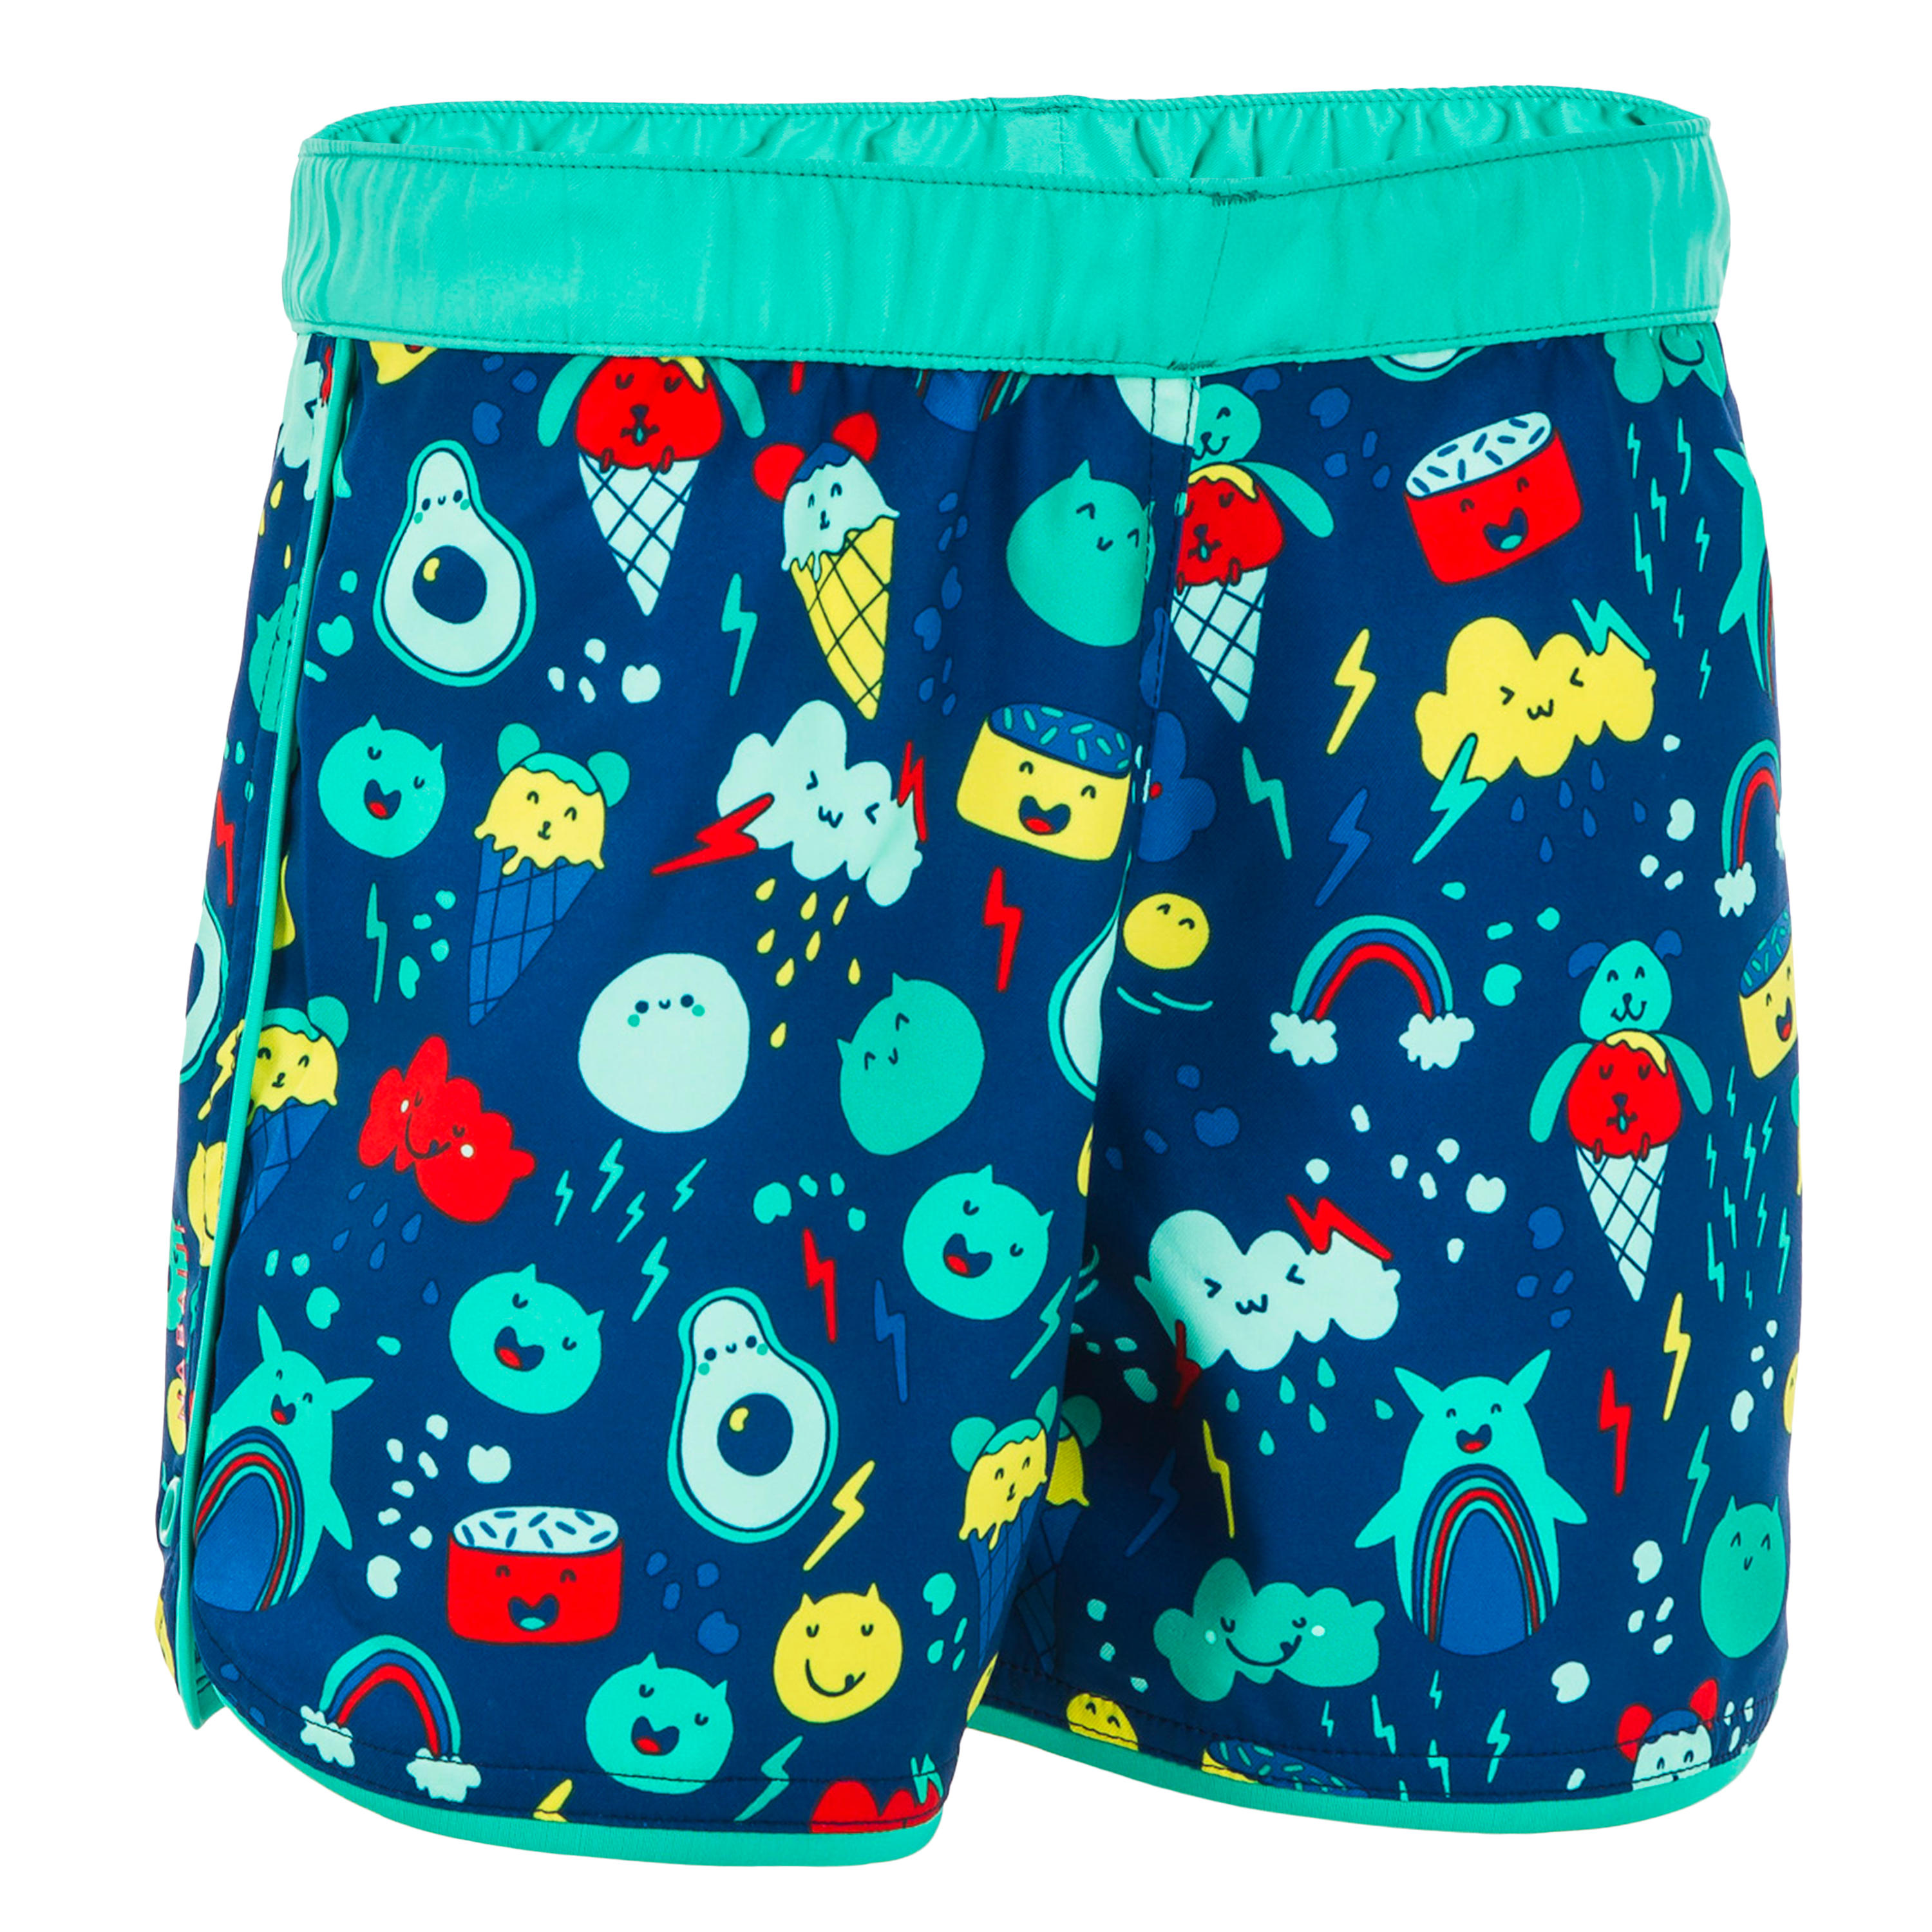 NABAIJI Baby Swim Shorts - Blue and Green Print